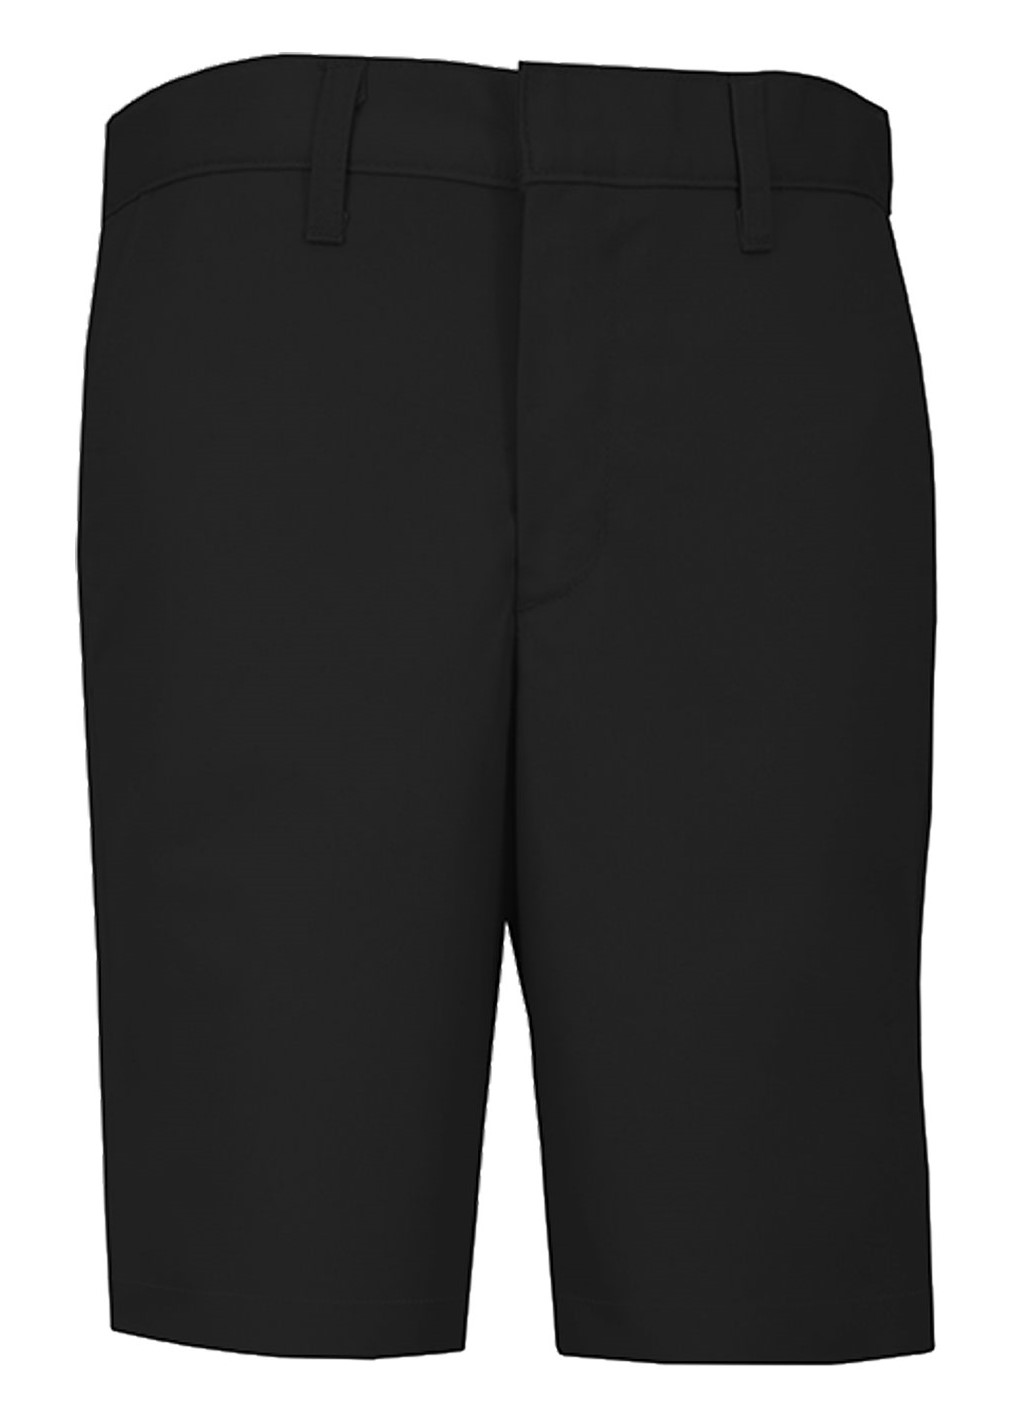 Boys Modern Fit Twill Shorts - Flat Front - #7897/7898 - Black